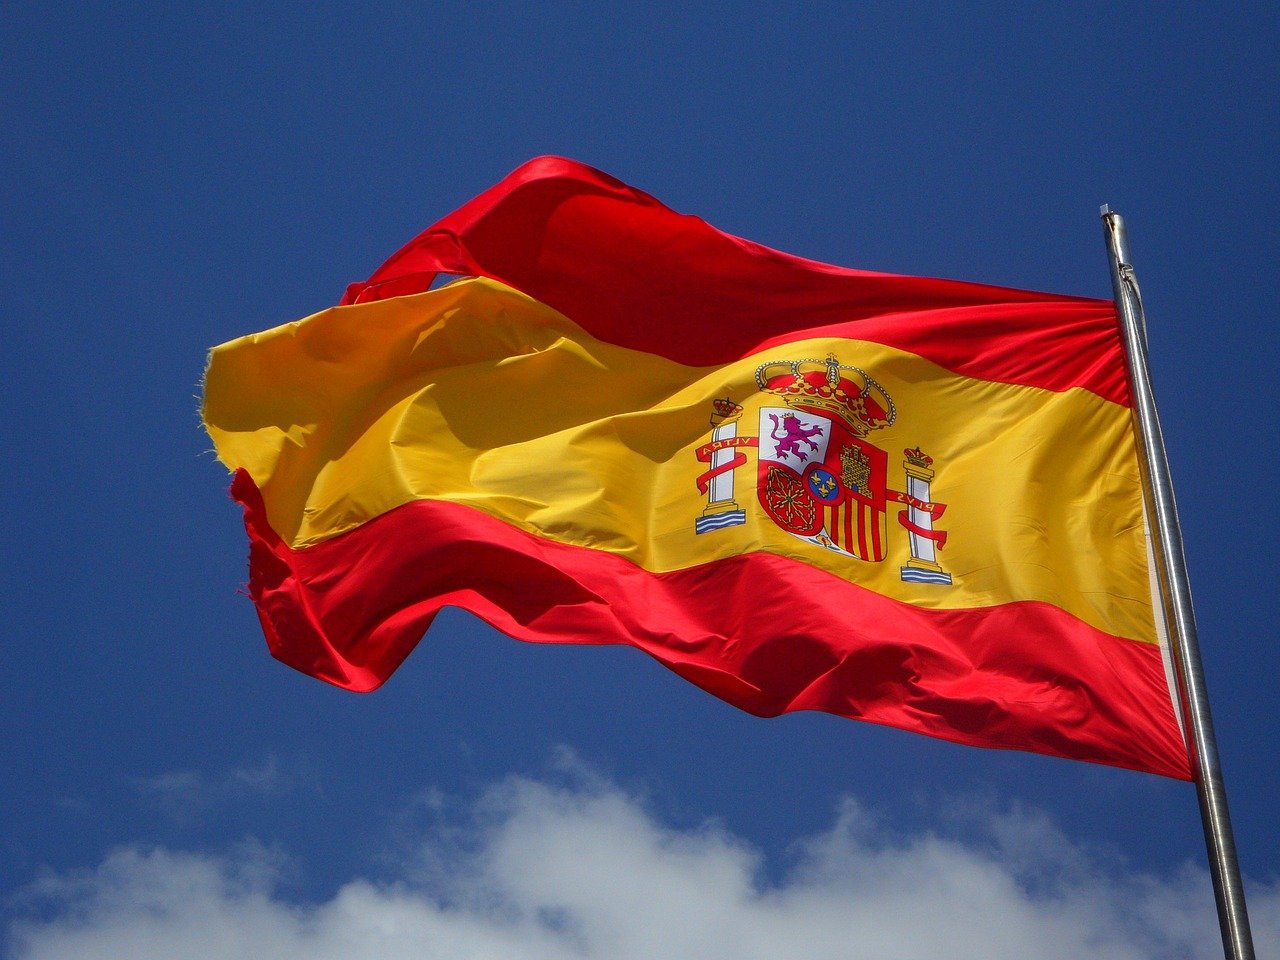 Company registration in Spain: start a business in Spain